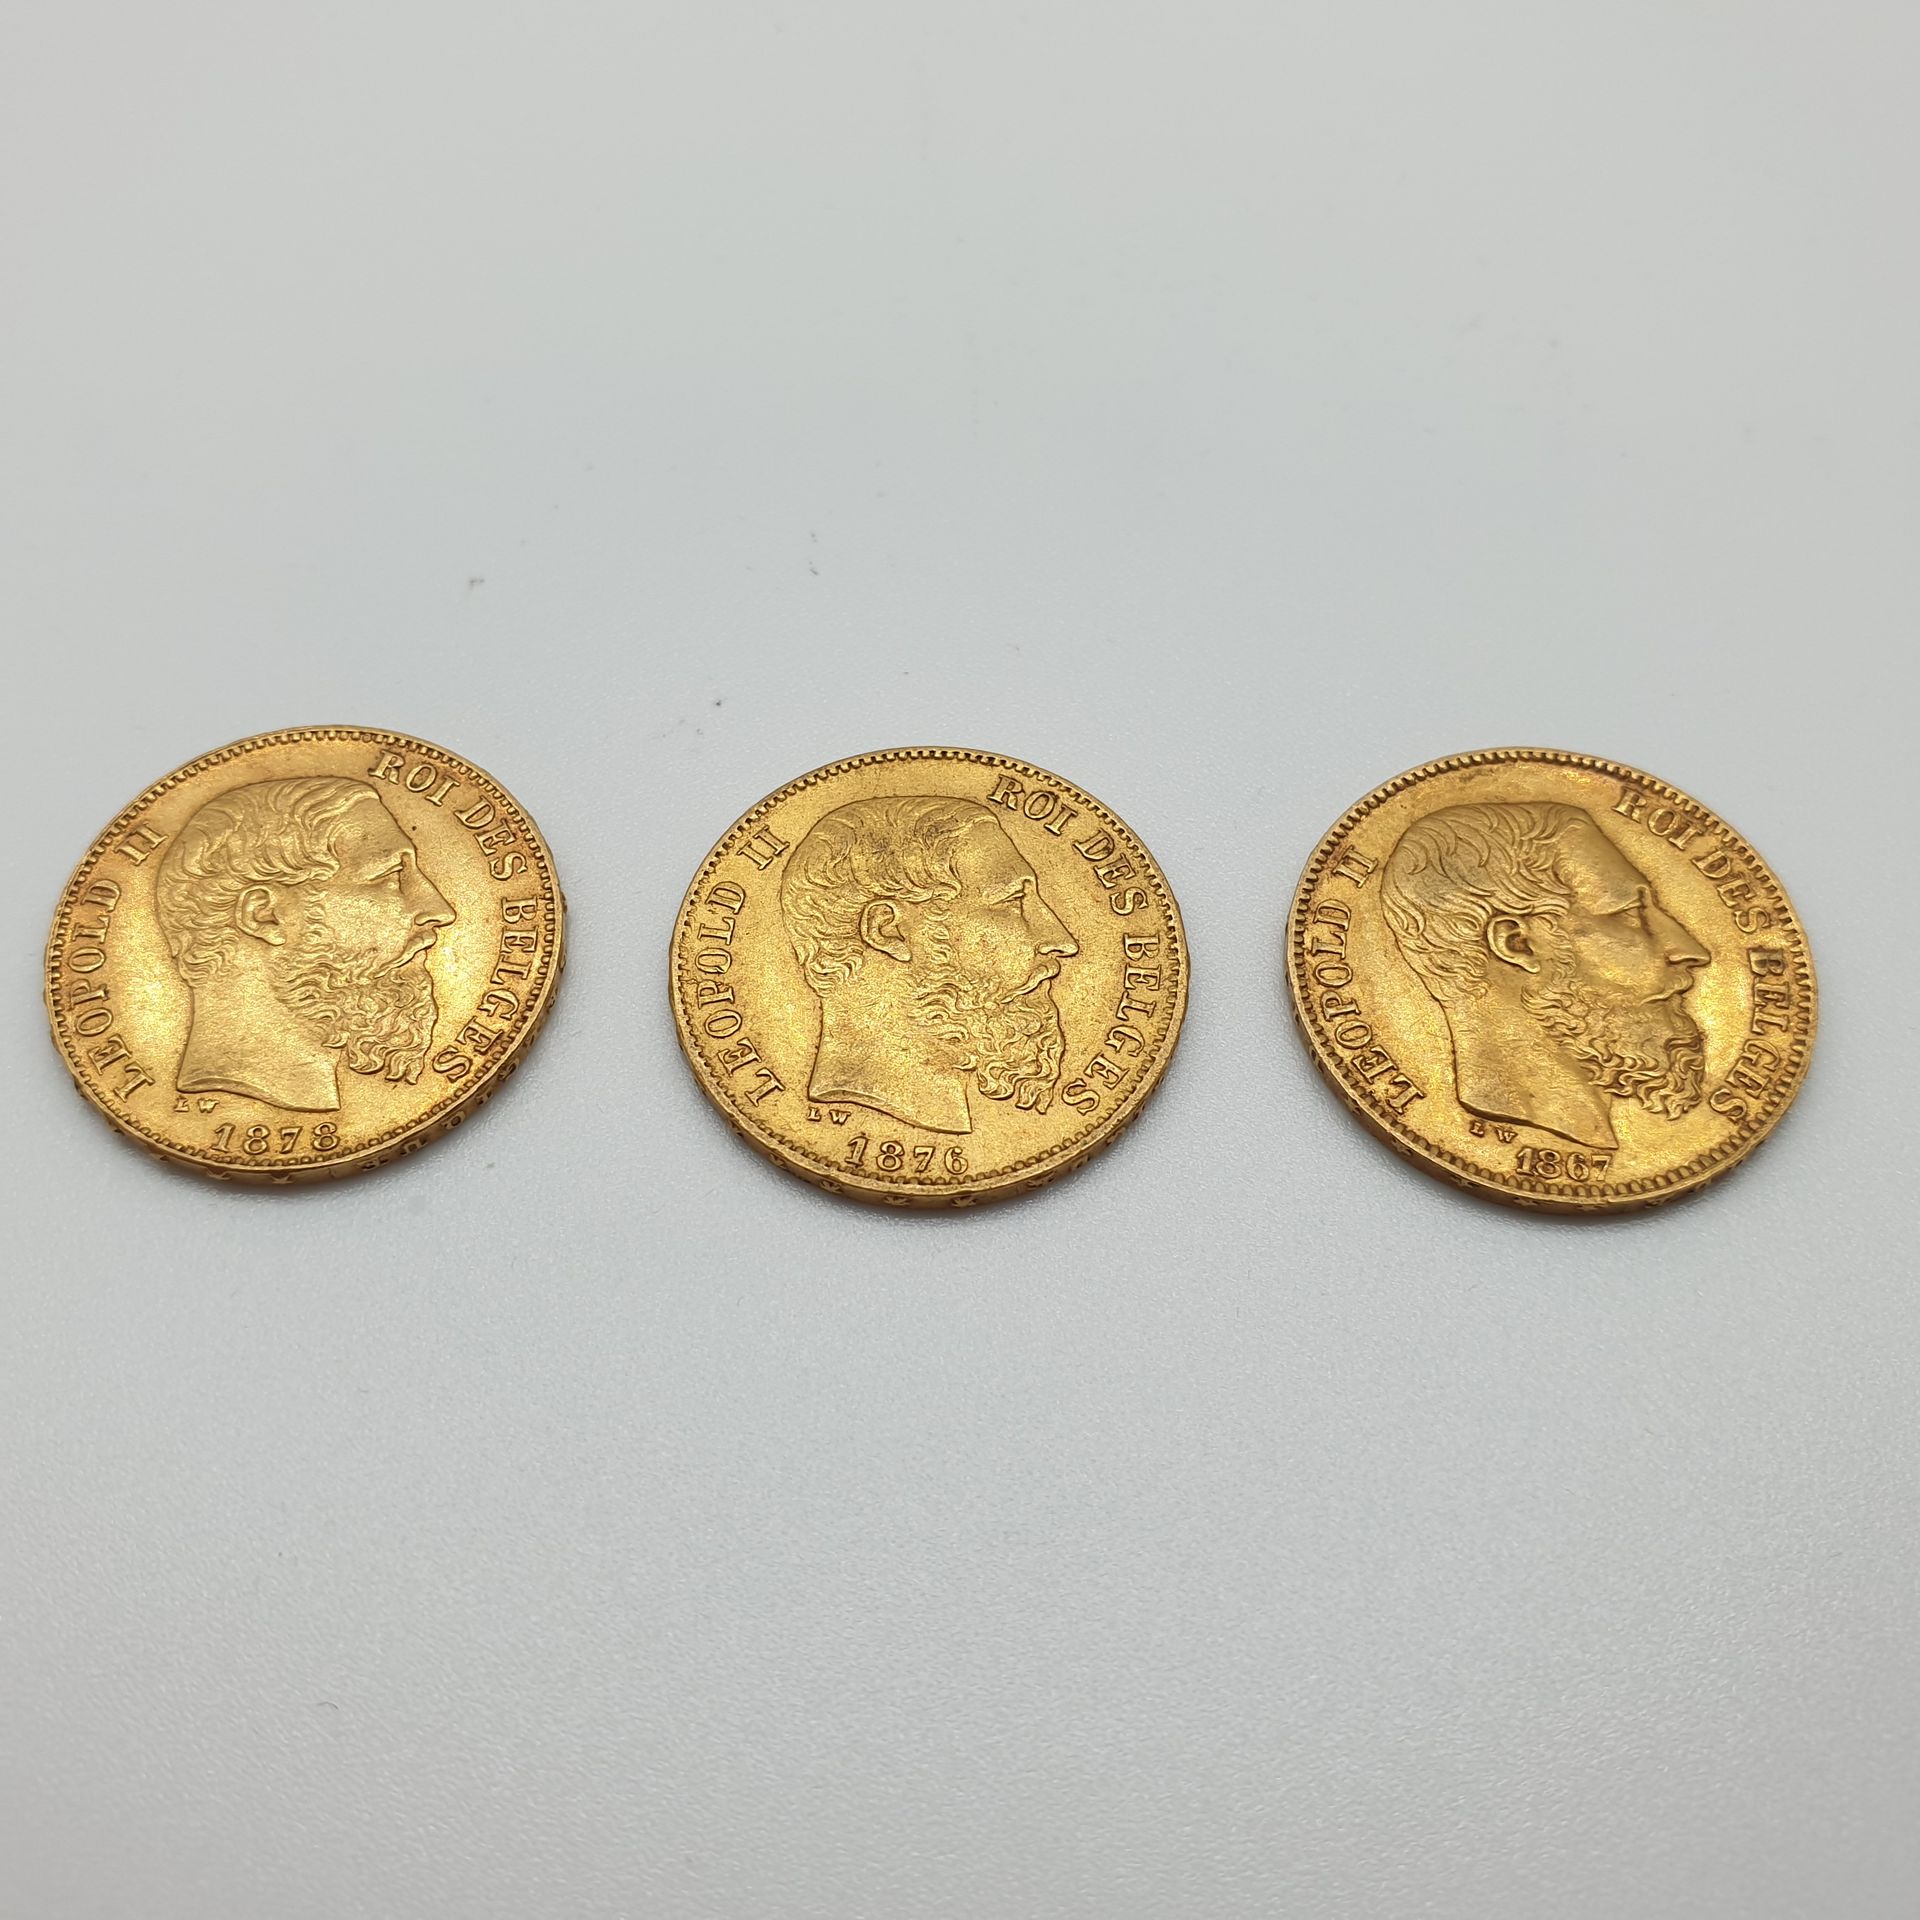 Null 比利时国王利奥波德二世1878年、1867年、1876年三枚20法郎金币拍品

重量 : 19,31 g